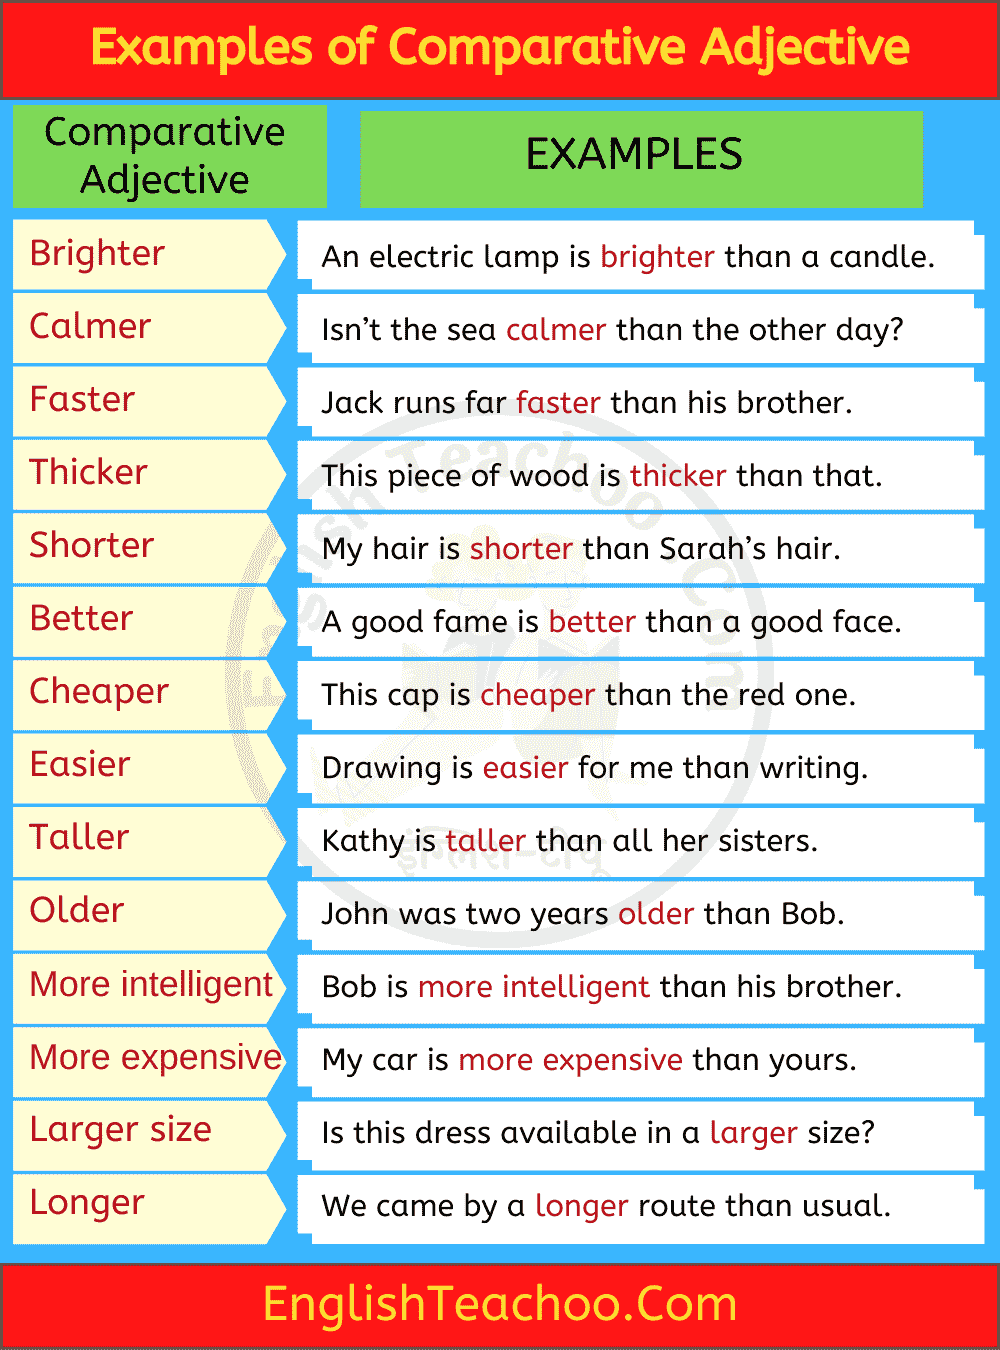 comparative-adjective-examples-englishteachoo